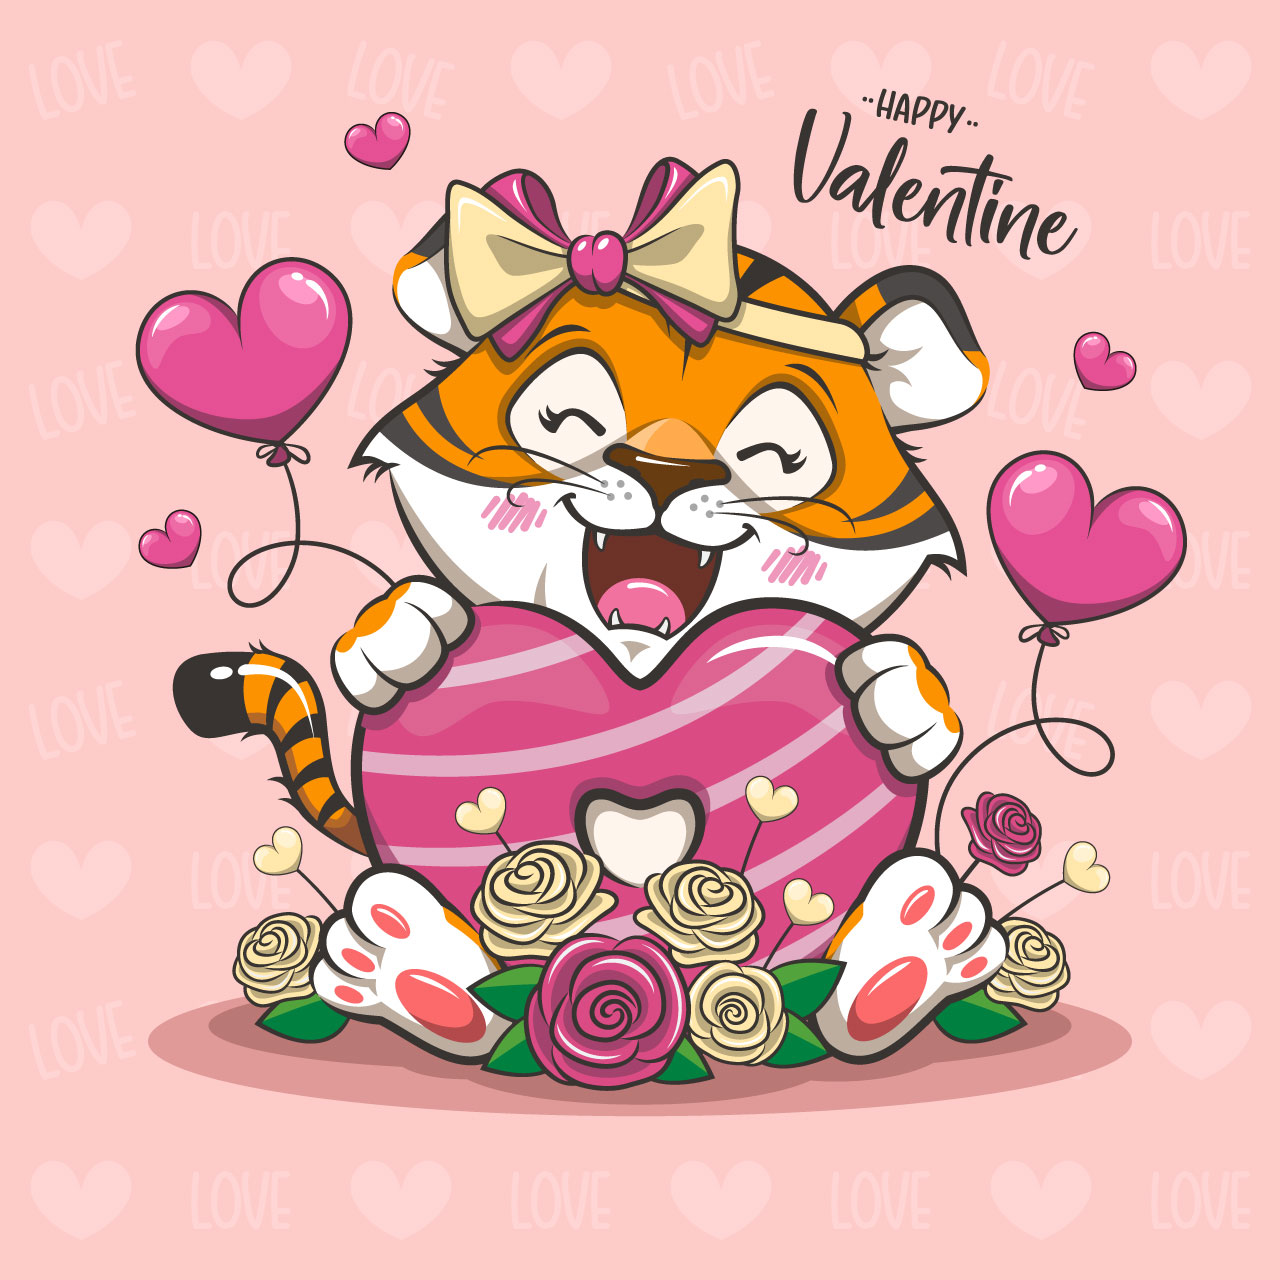 Cute tiger with love heart balloons animal valentine cartoon illustration